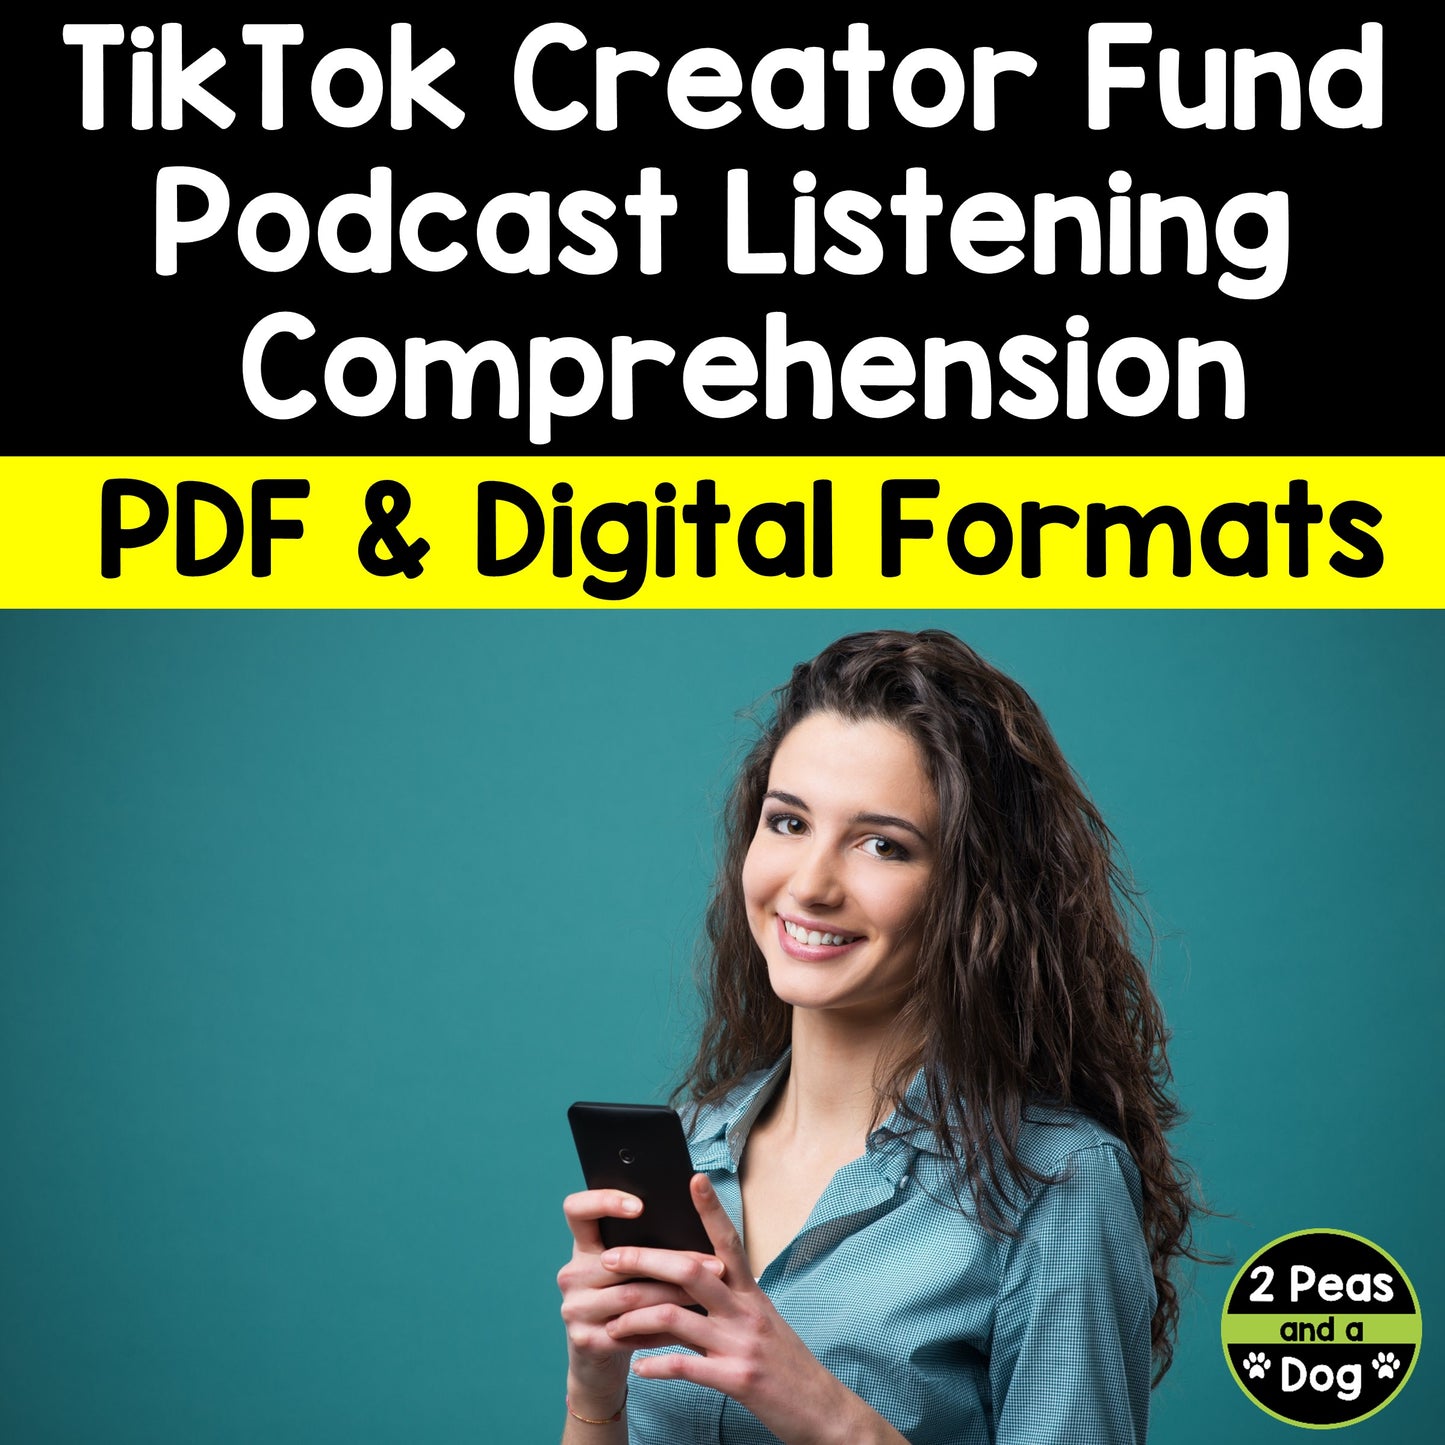 Podcast Listening Comprehension Lesson - TikTok Creator Fund